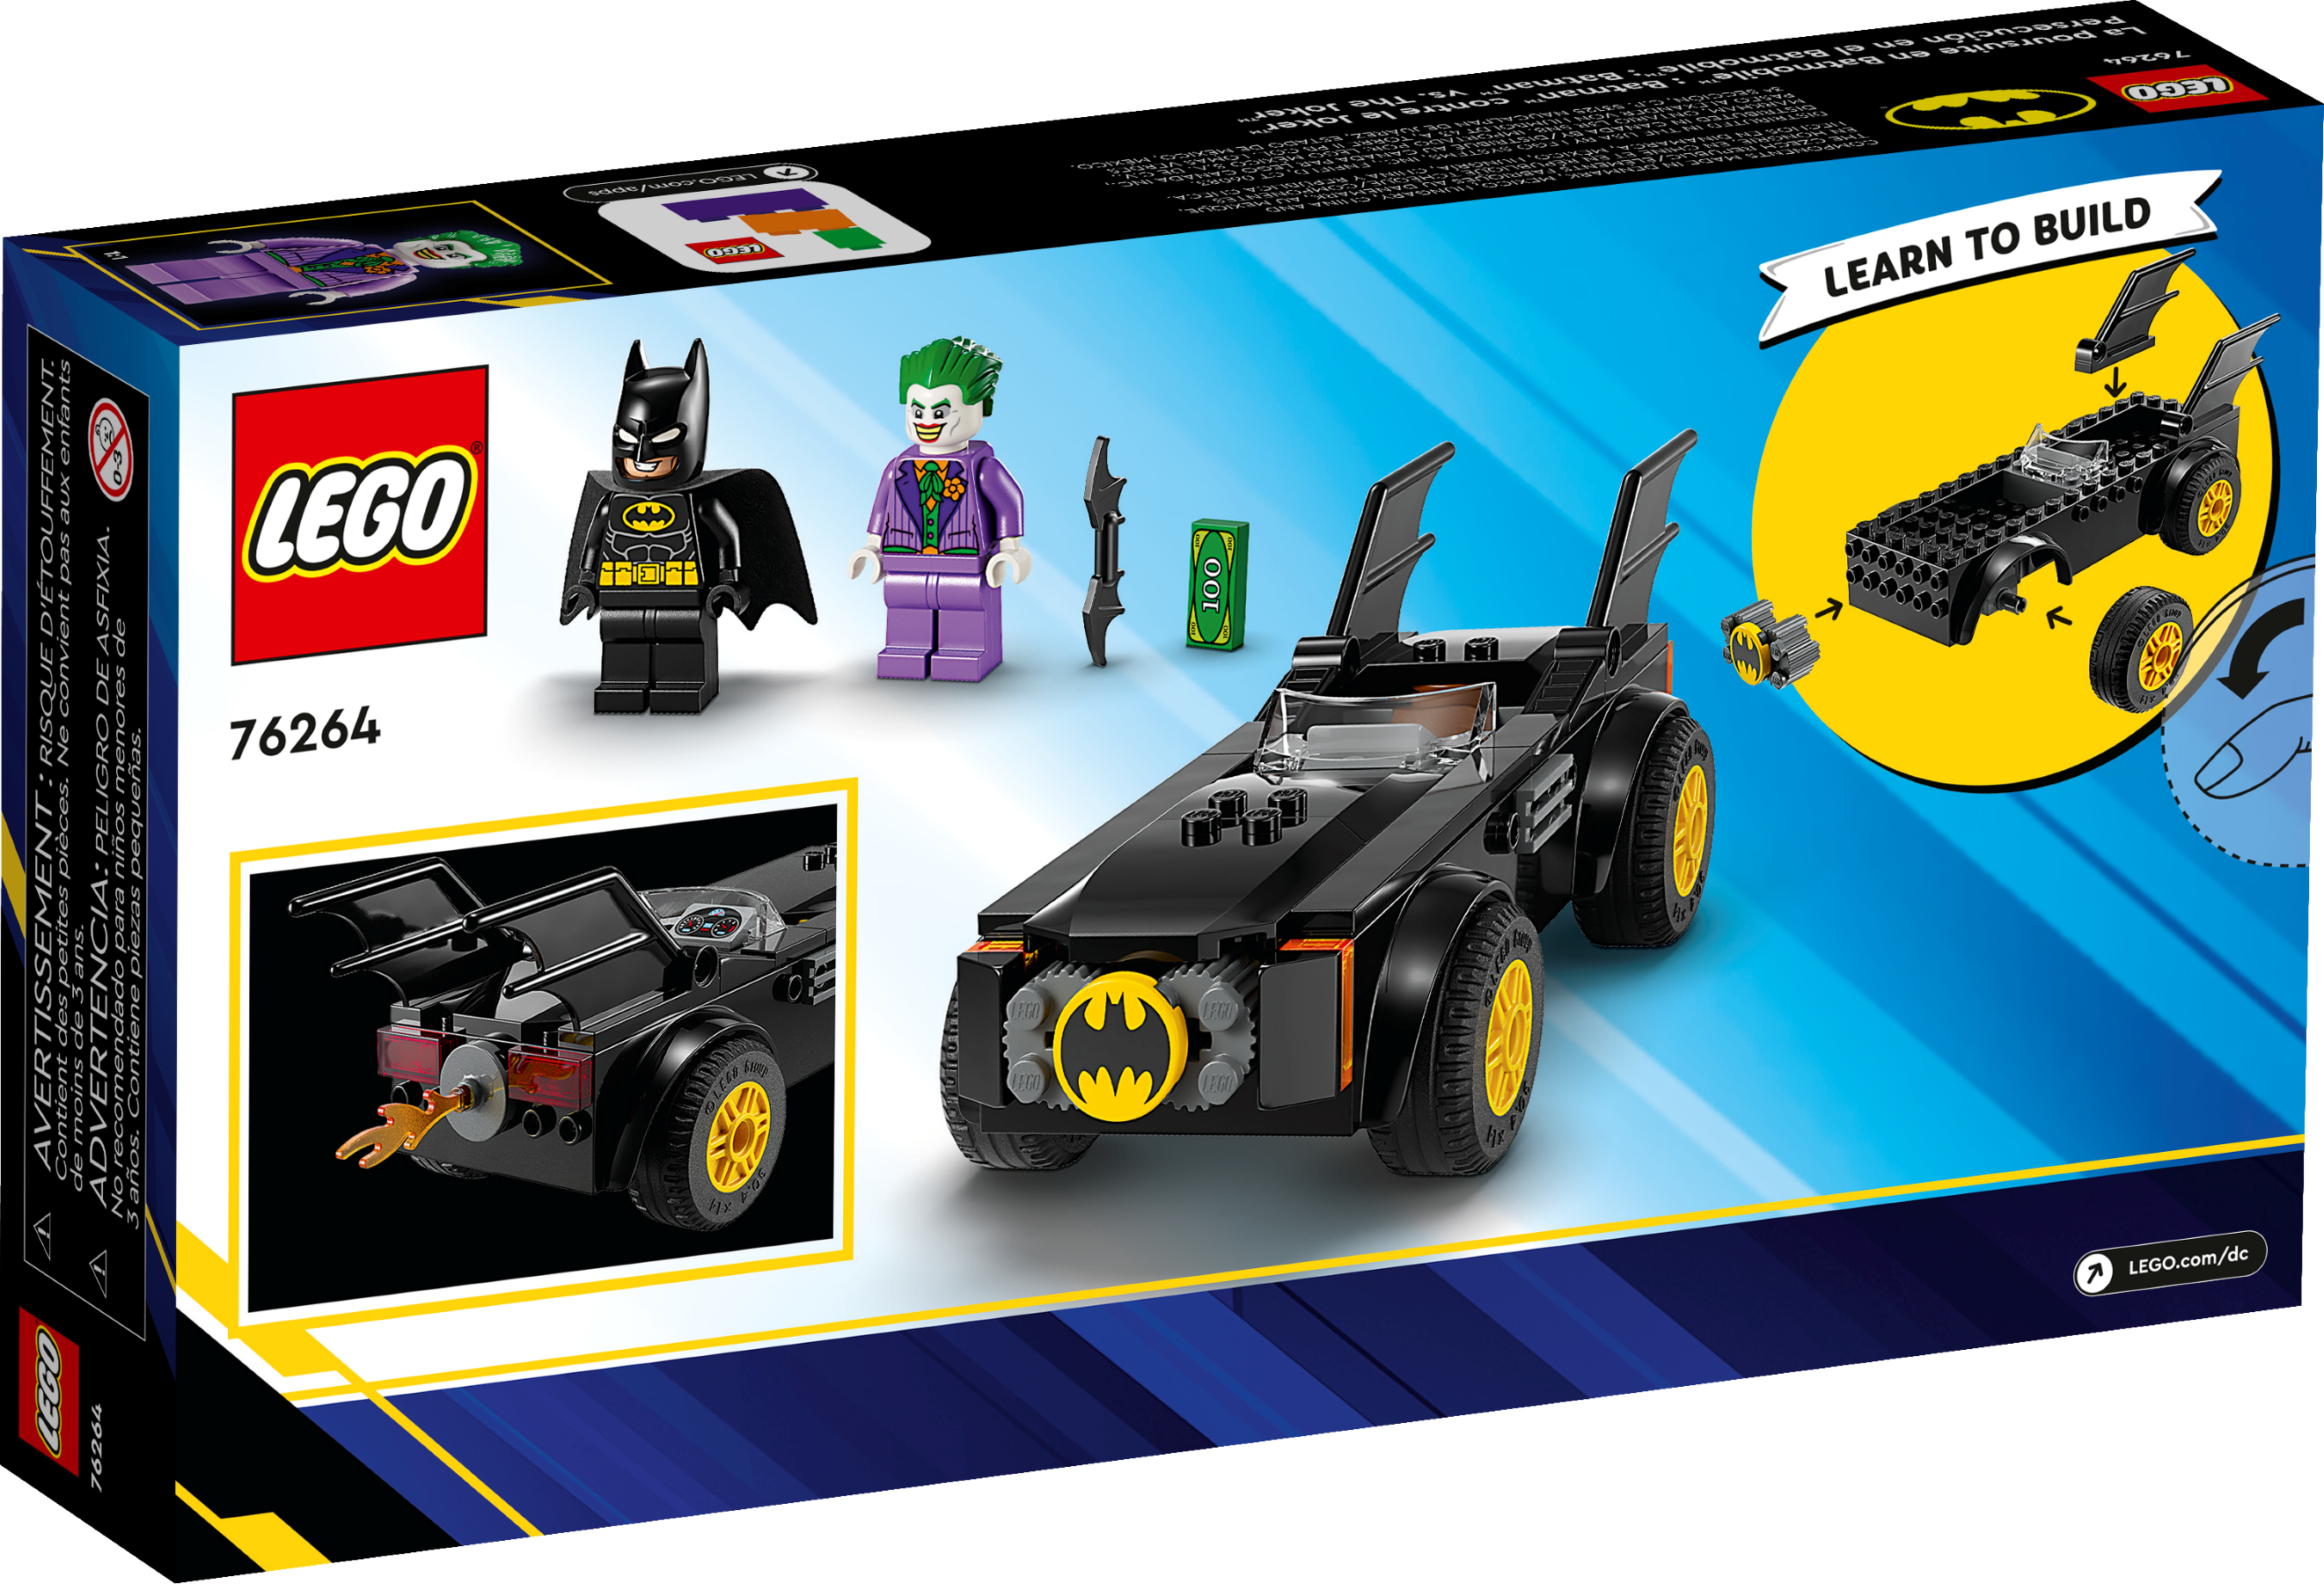 Batmobile™ Pursuit: Batman™ vs. The Joker™ 76264, Batman™